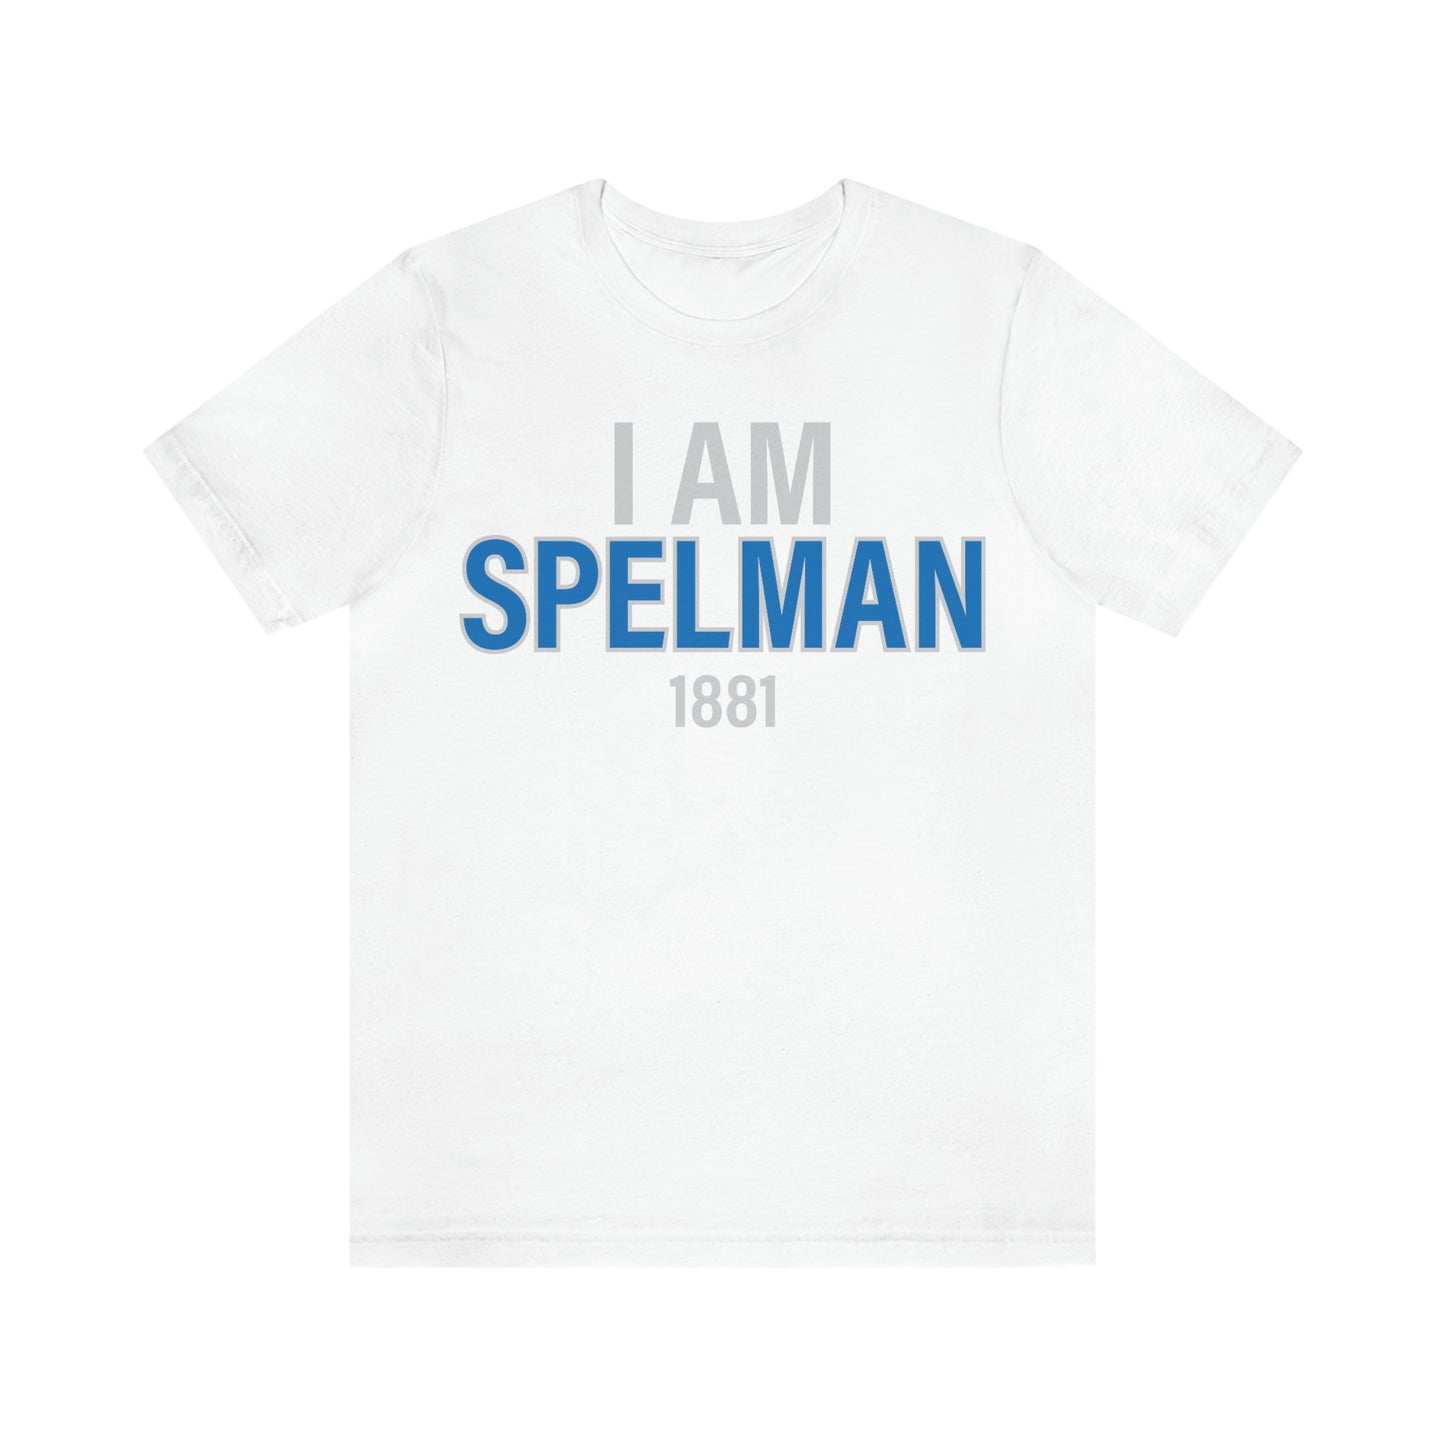 HBCU Love (Spelman College/ I am Spelman Tee)